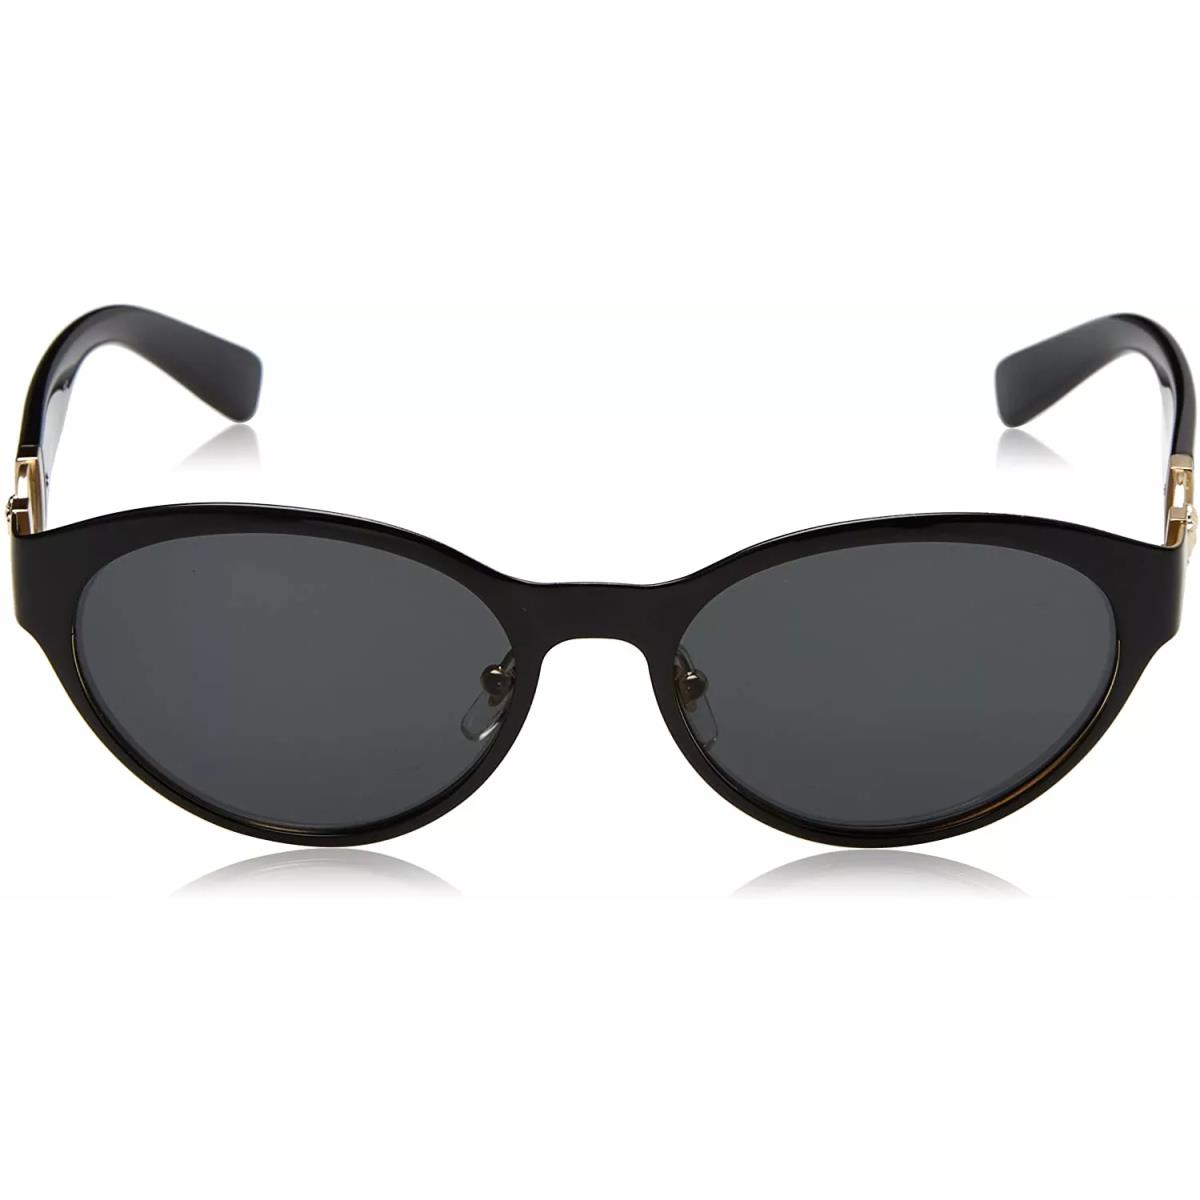 Versace sunglasses  - Black Pale Gold Frame, Gray Lens